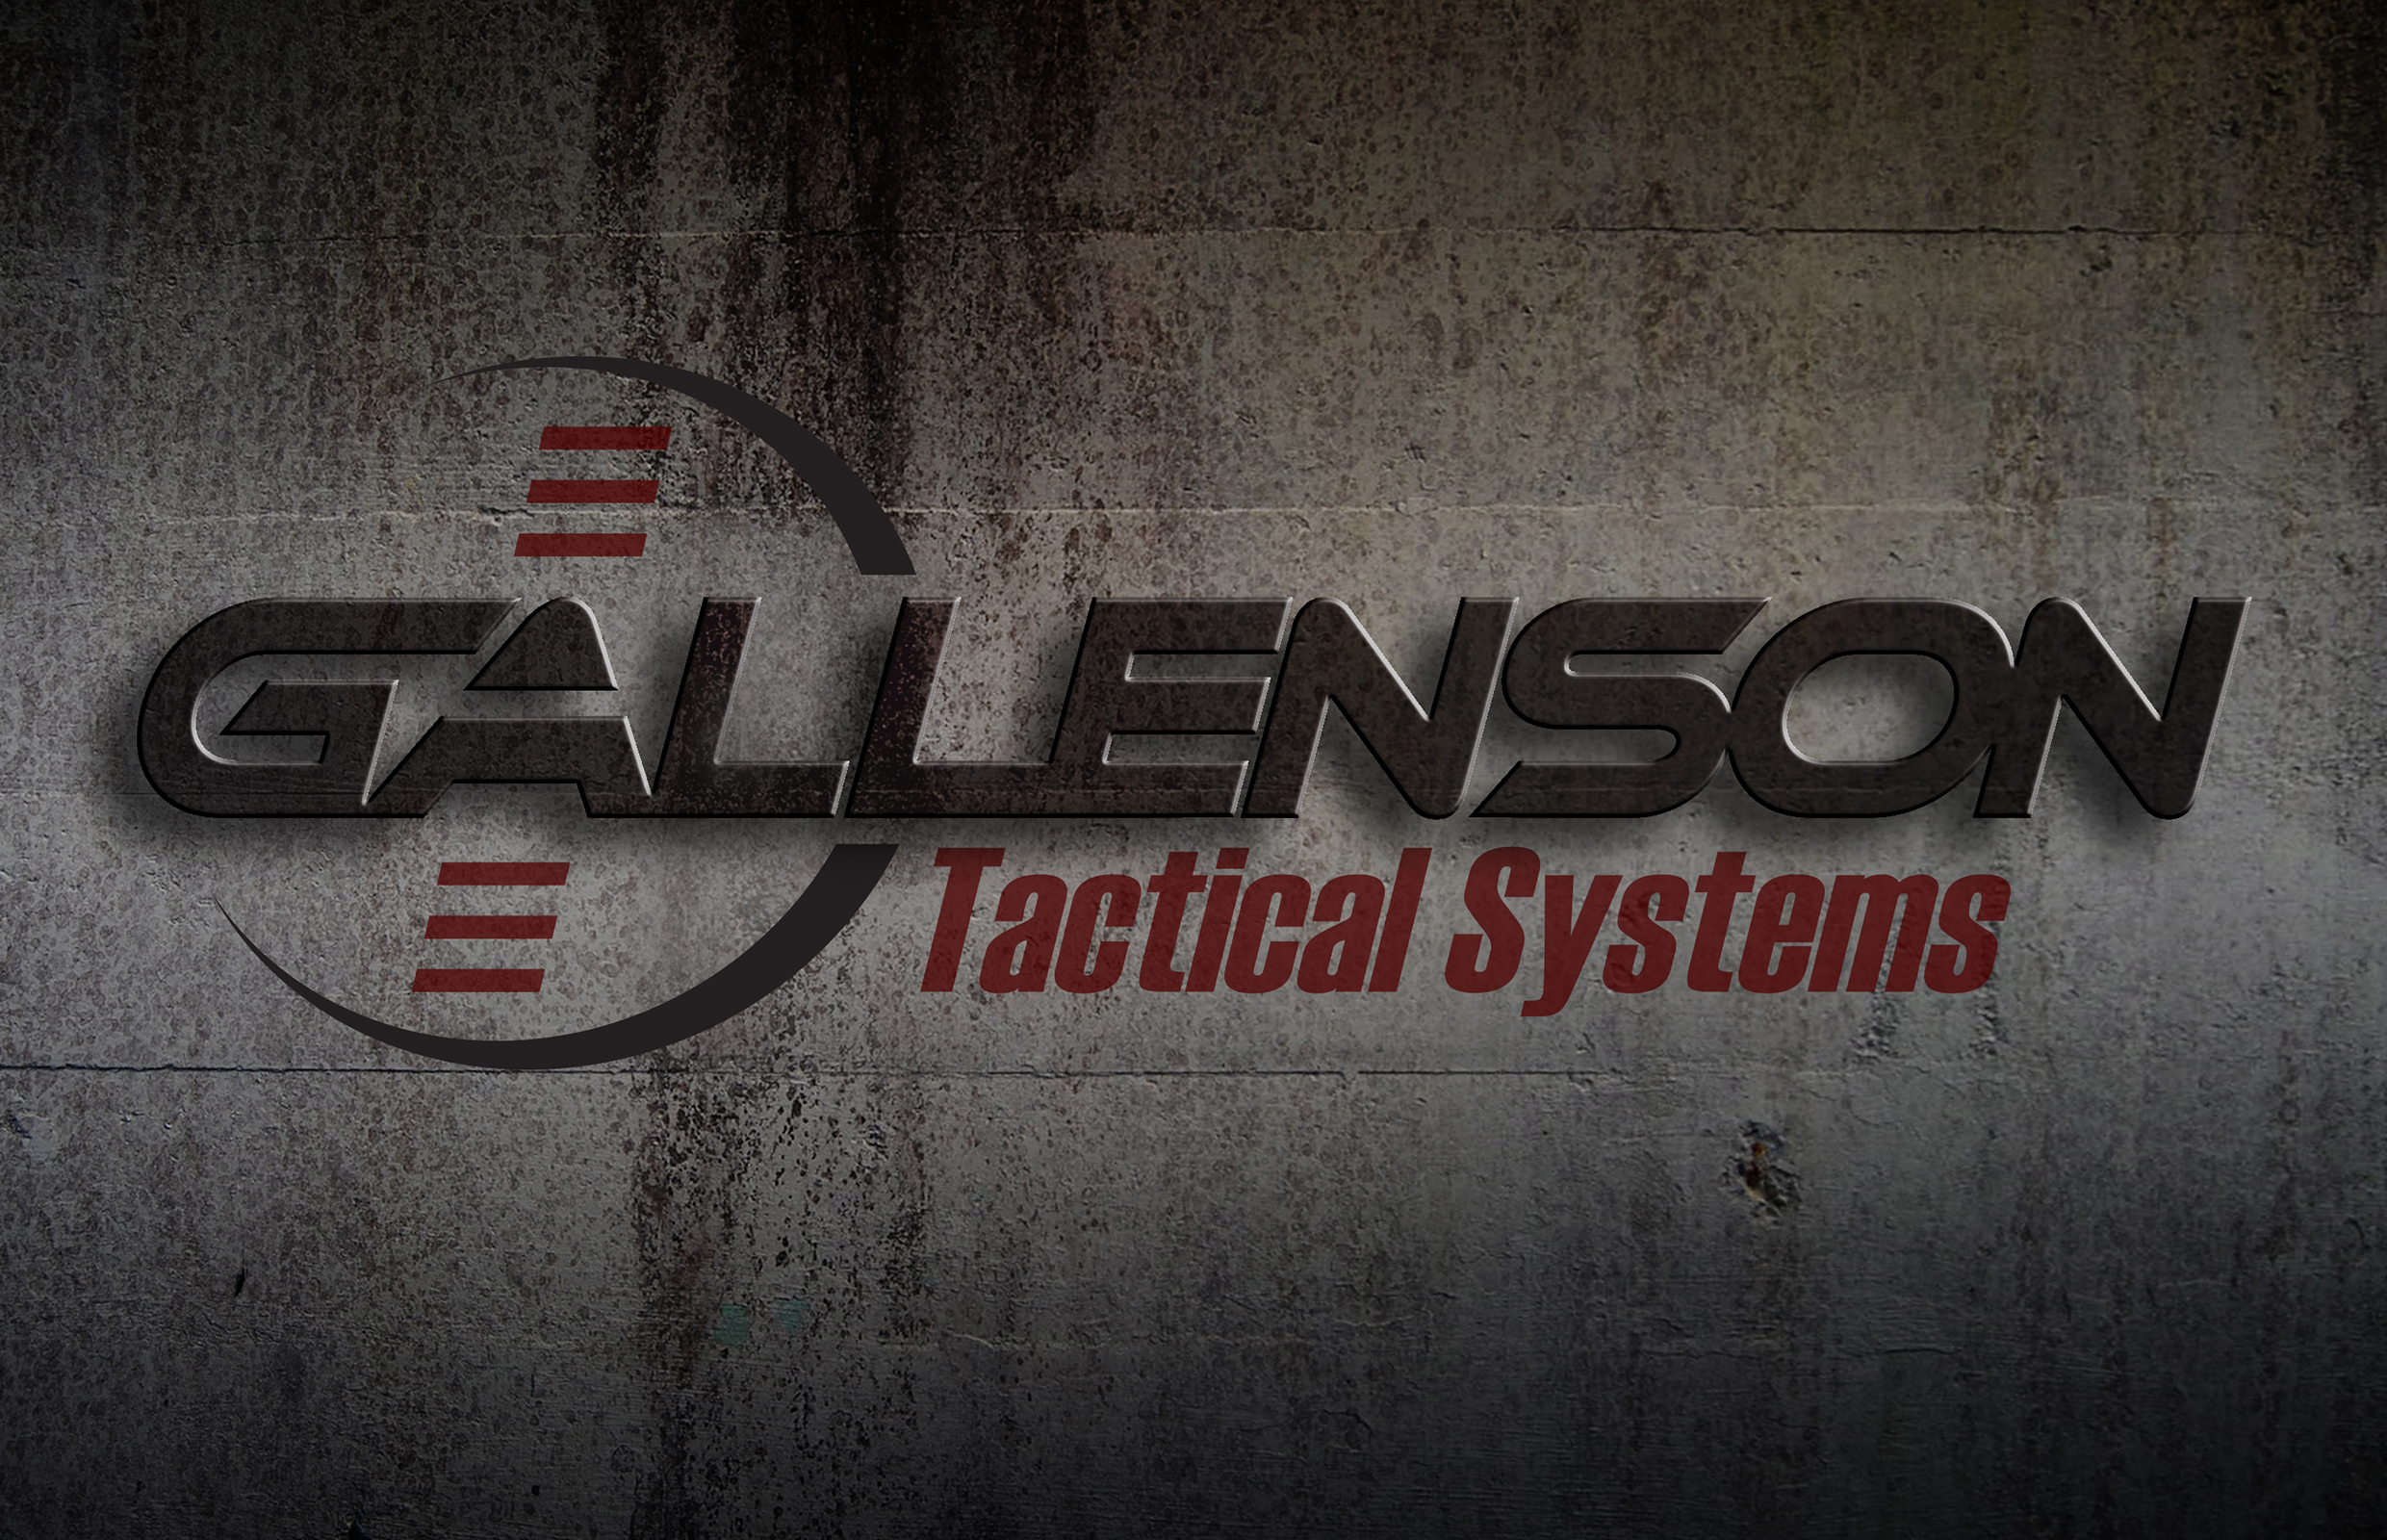 Galactapedia Gallenson Tactical Systems.jpg